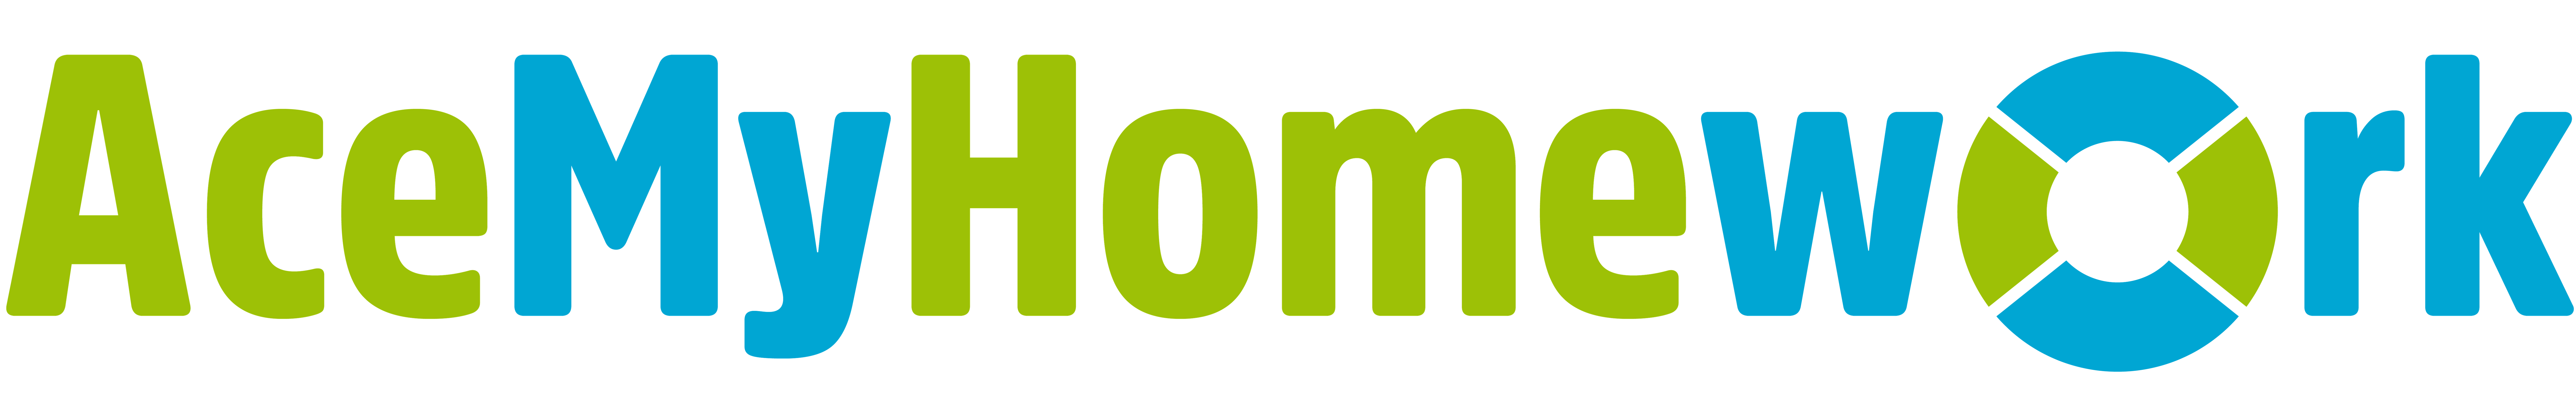 Acemyhomework Writers  logo